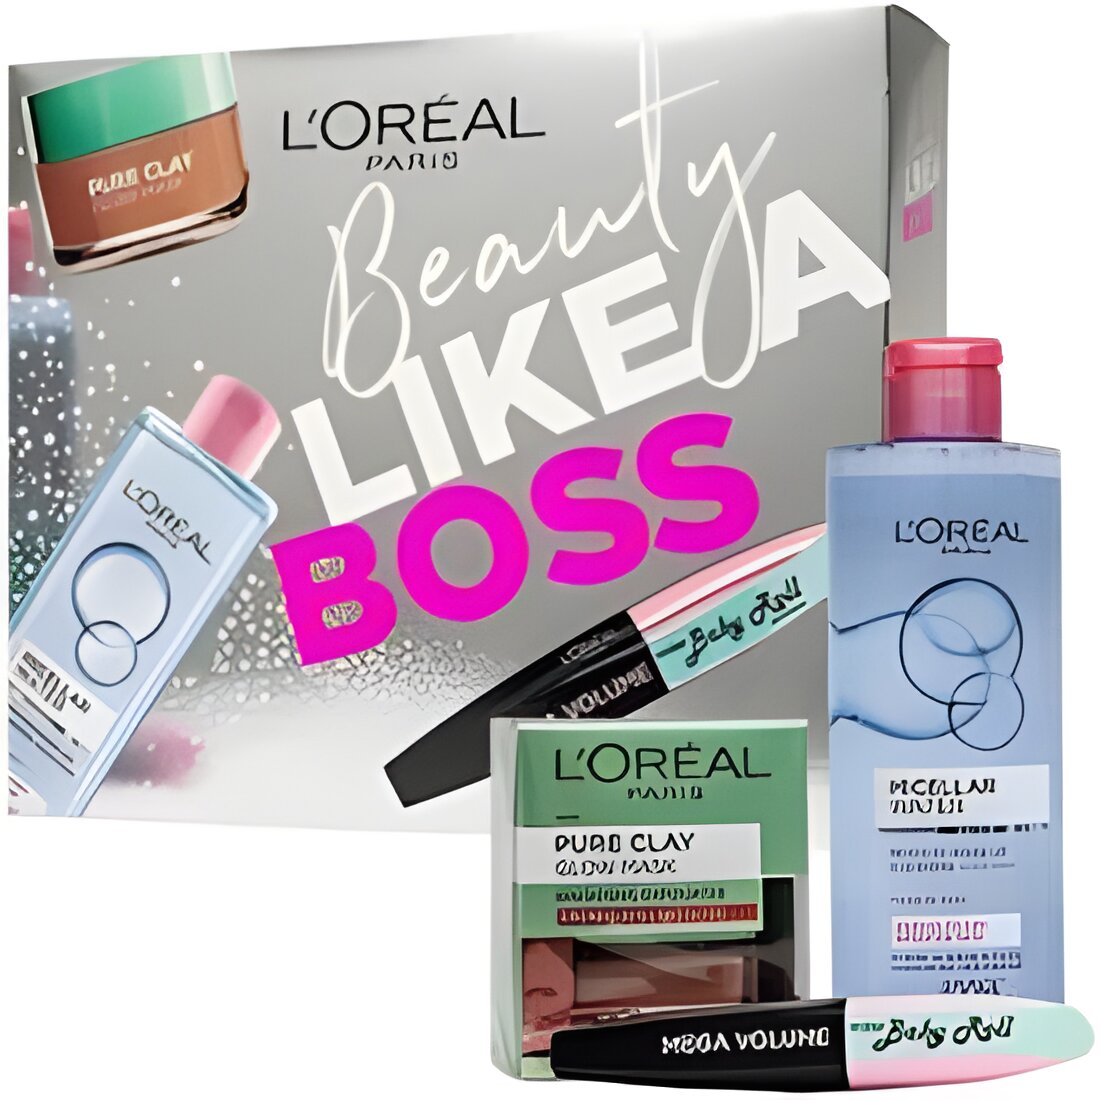 Free L'Oreal Beauty Box